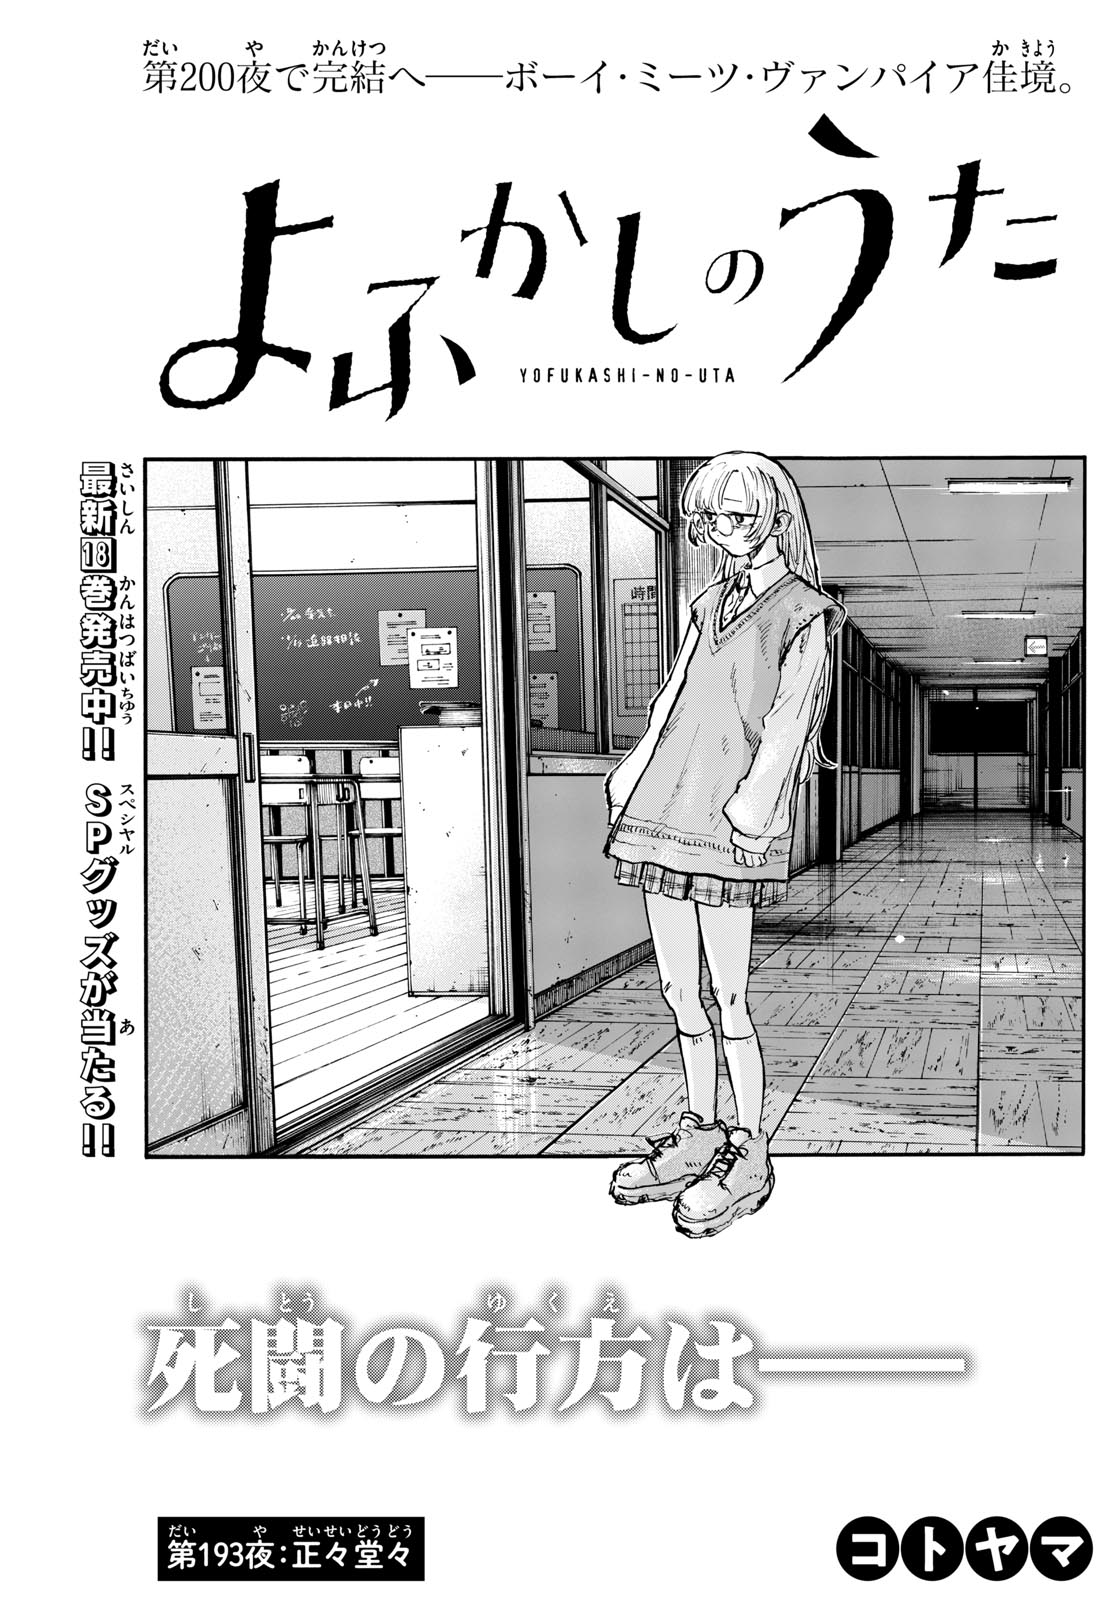 Yofukashi no Uta - Chapter 193 - Page 3